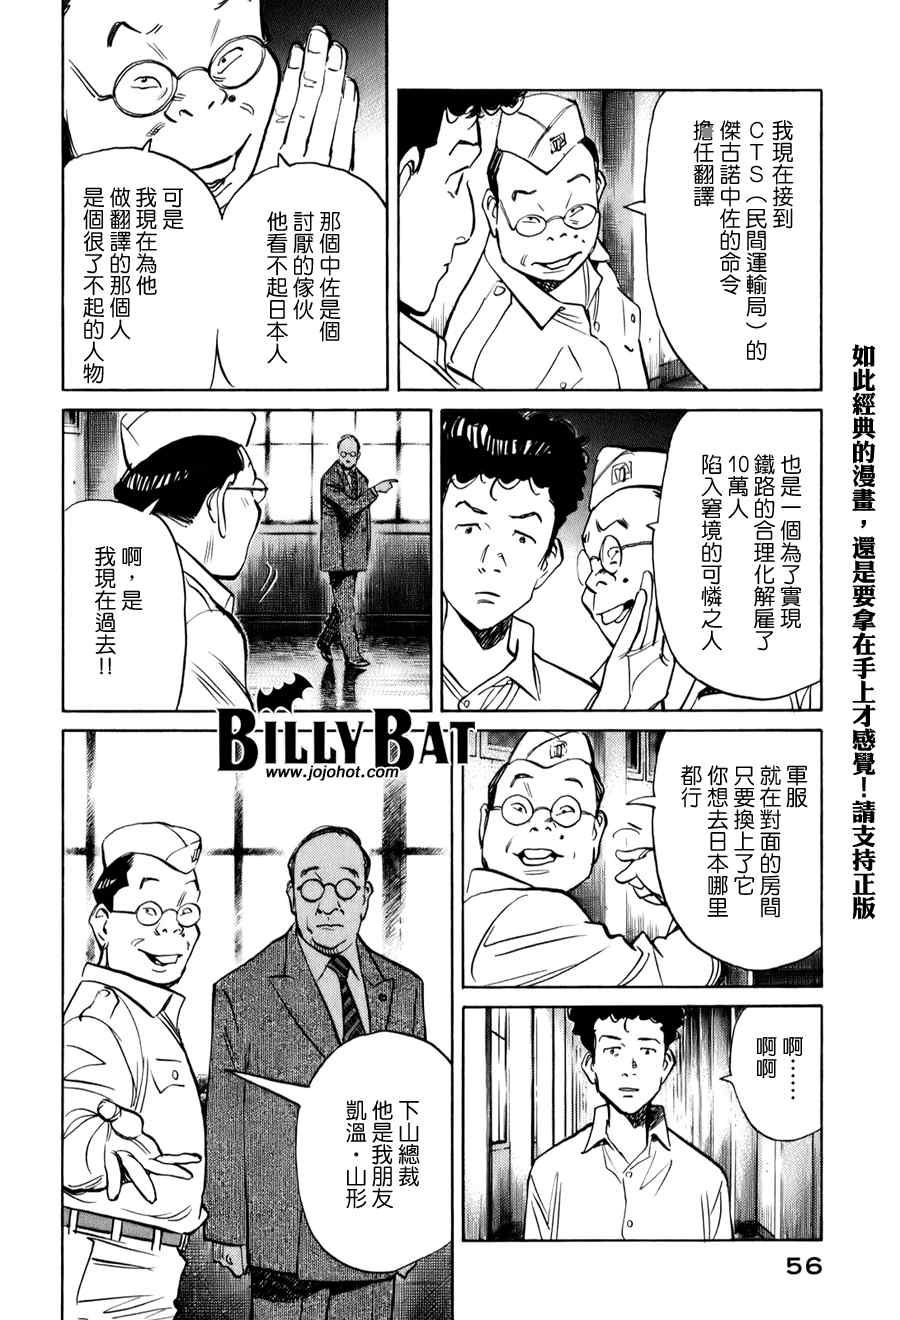 Billy_Bat - 第3話 - 4